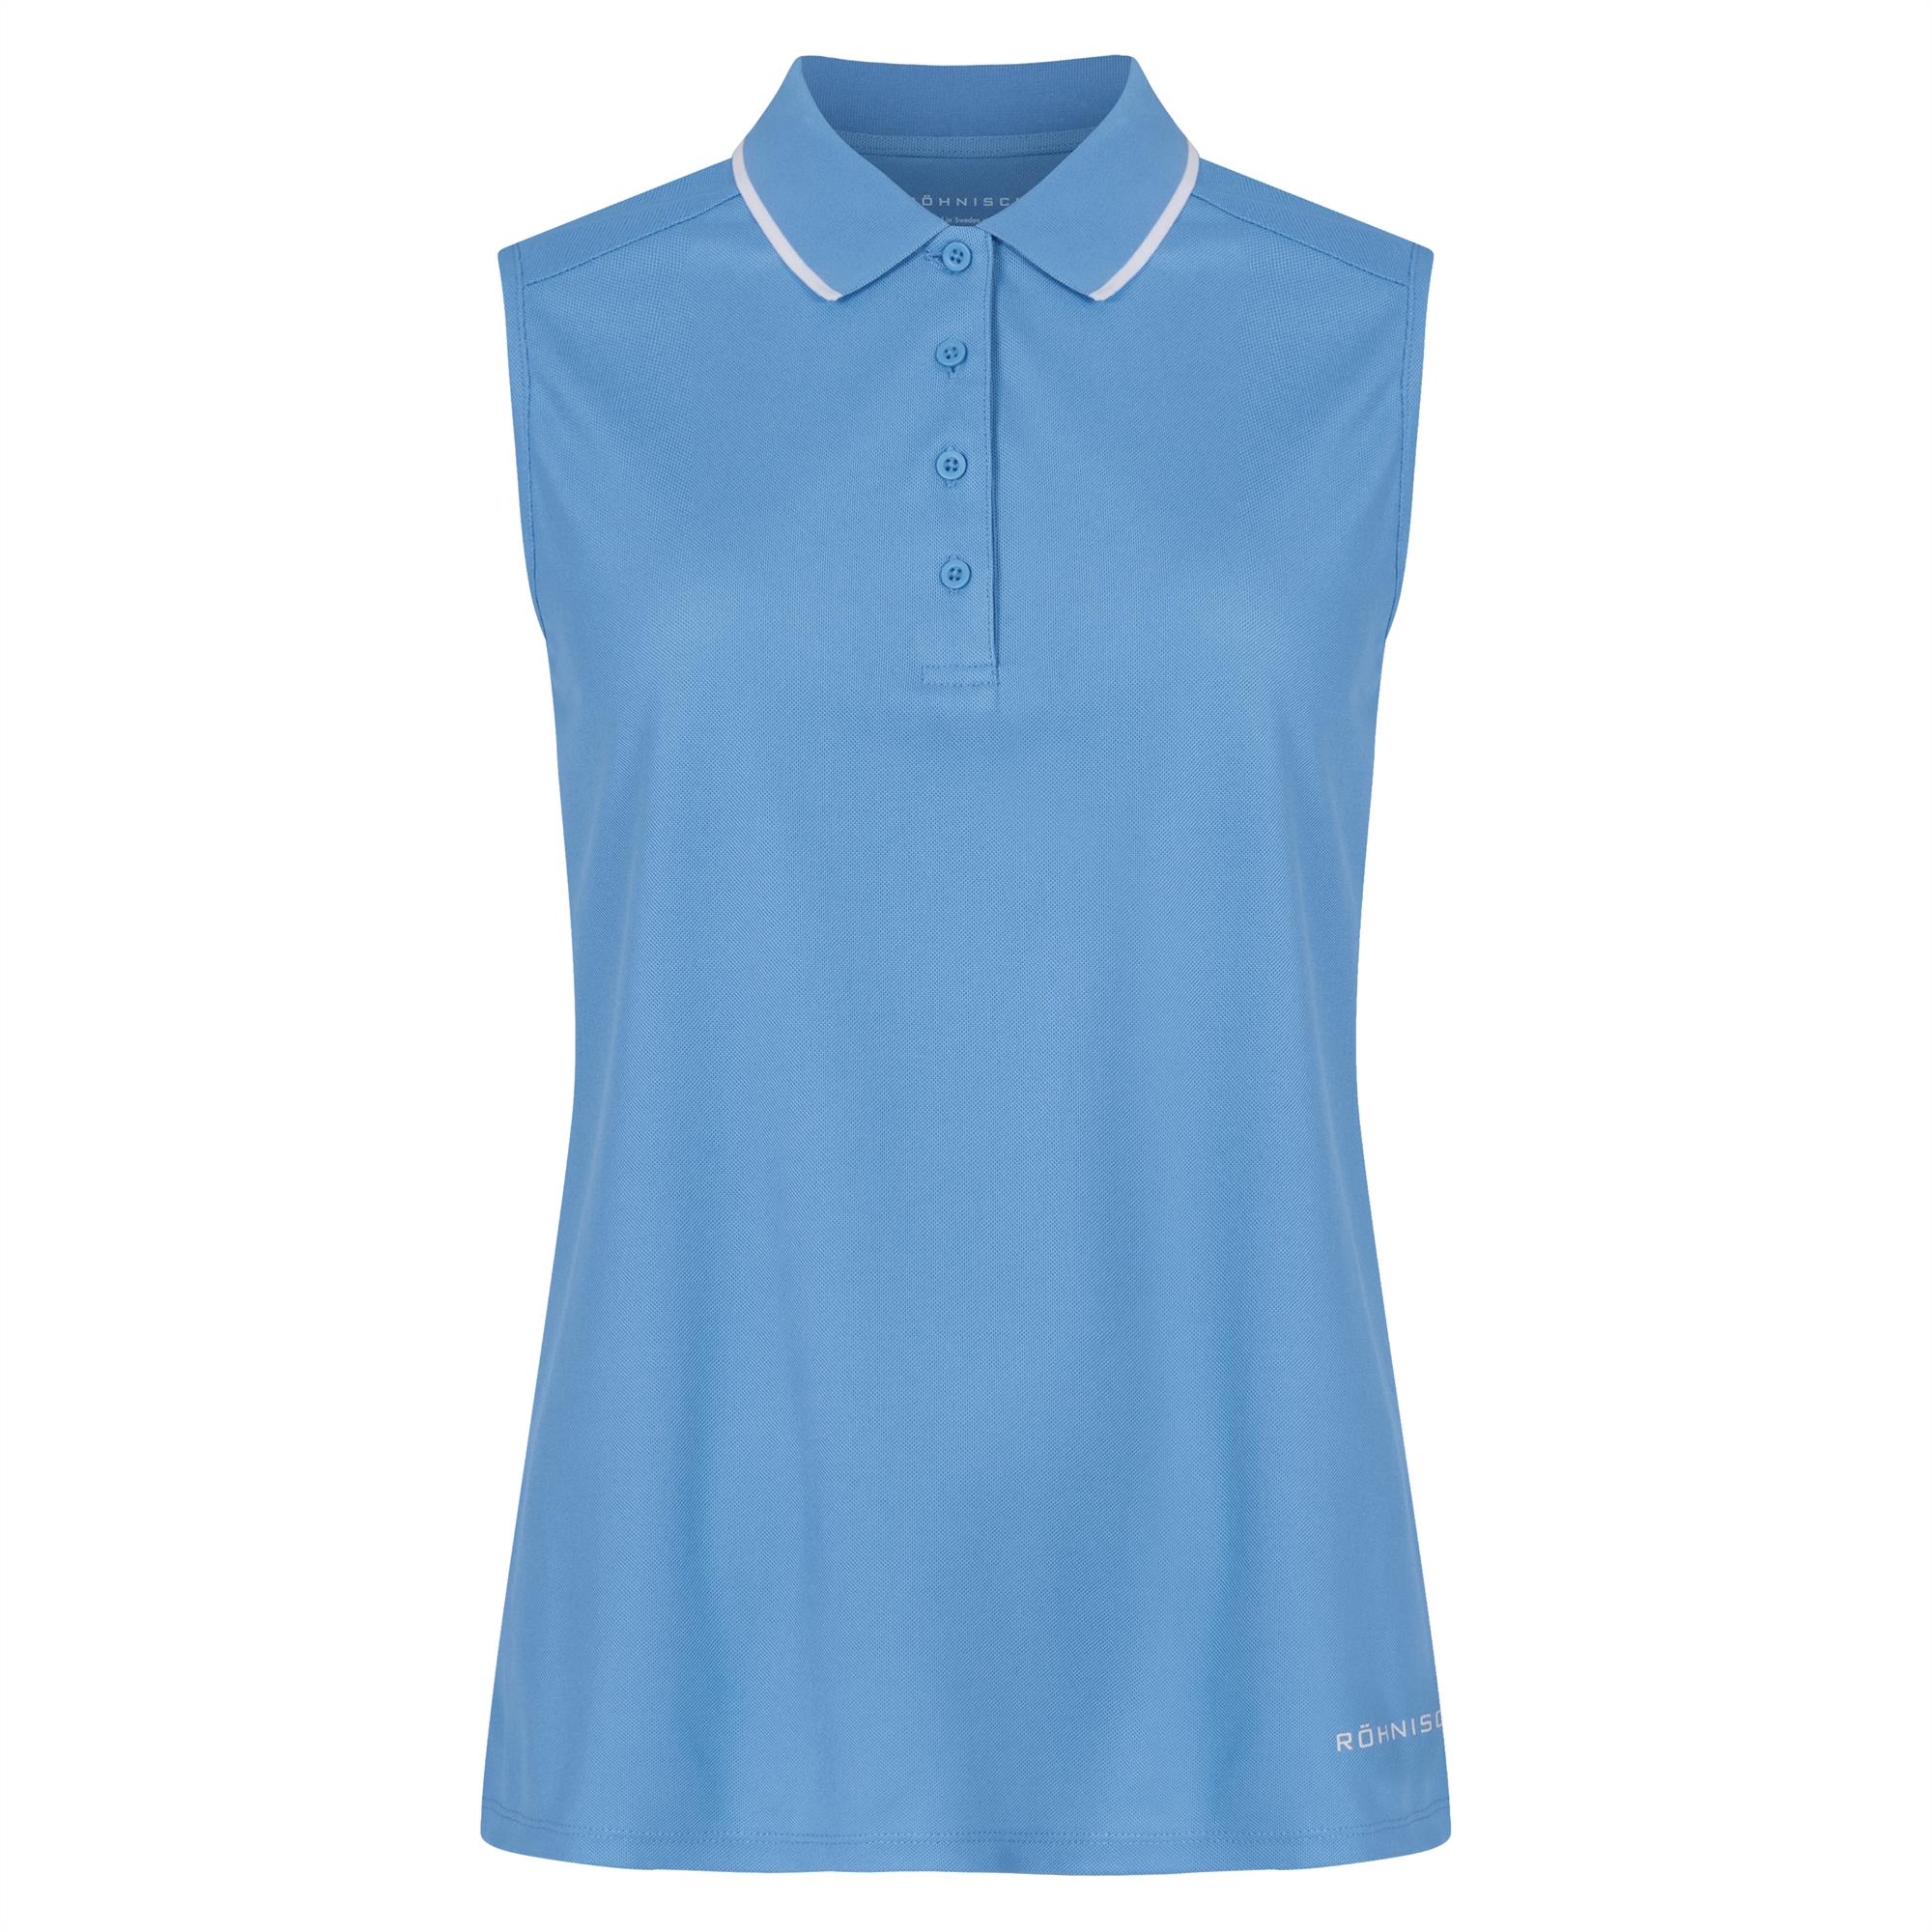 Rohnisch Miriam Sleeveless Ladies Golf Poloshirt Heavenly Blue